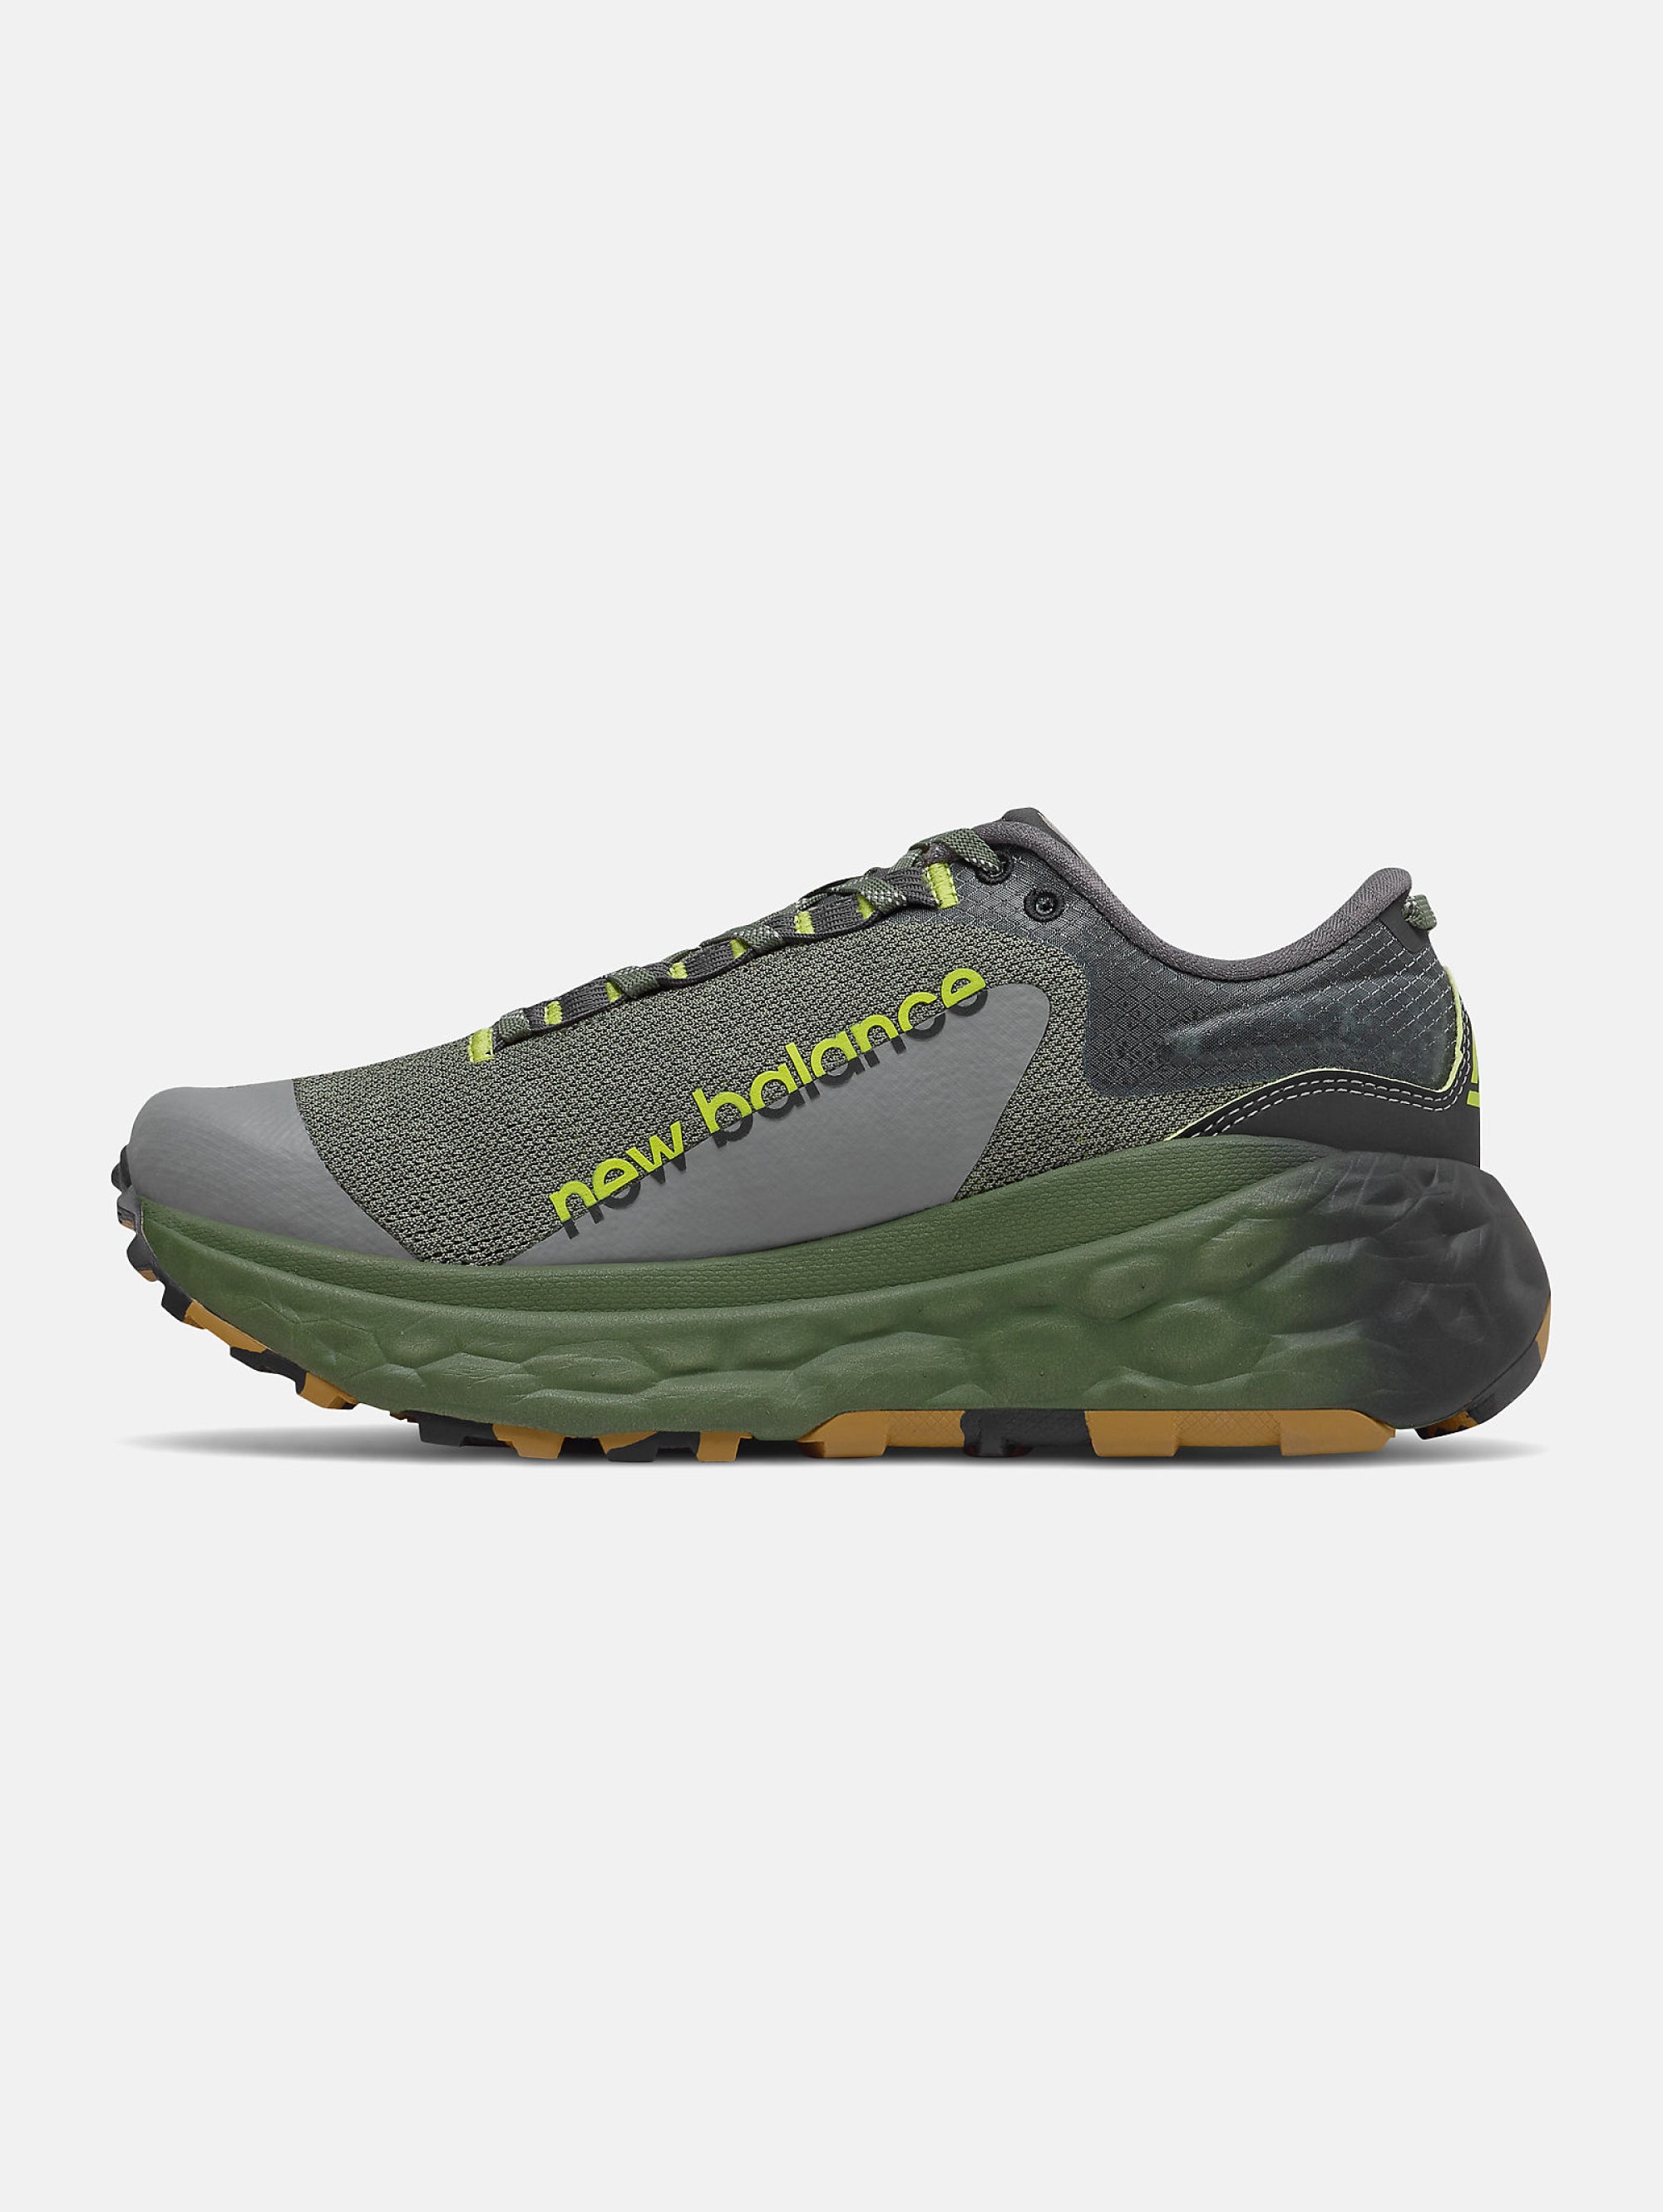 Sneakers in Fresh Foam Verde